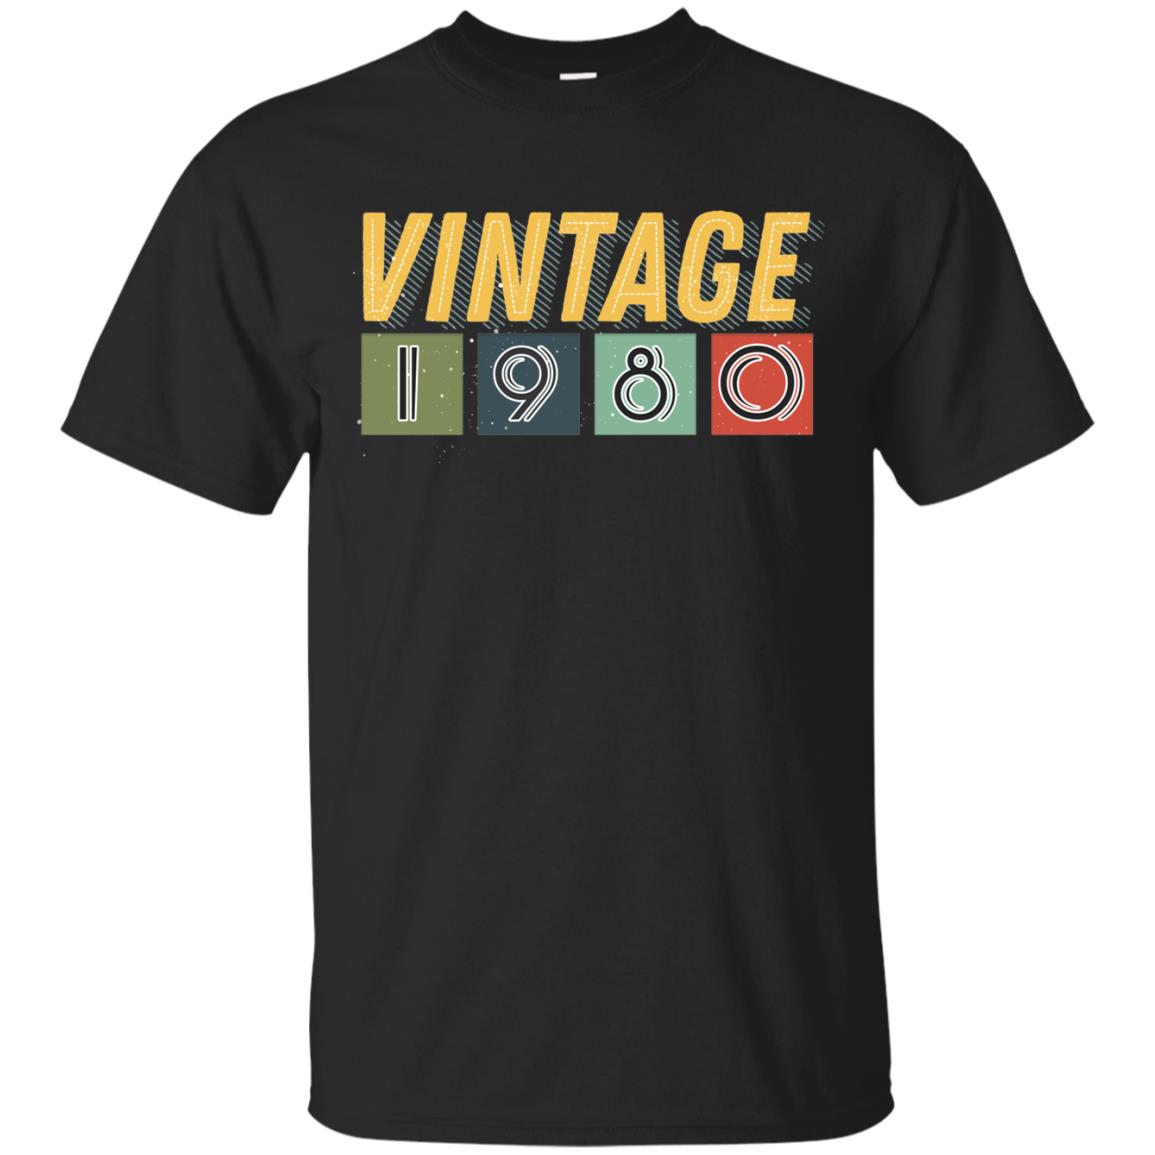 Vintage 1980 38th Birthday Gift Shirt For Mens Or WomensG200 Gildan Ultra Cotton T-Shirt